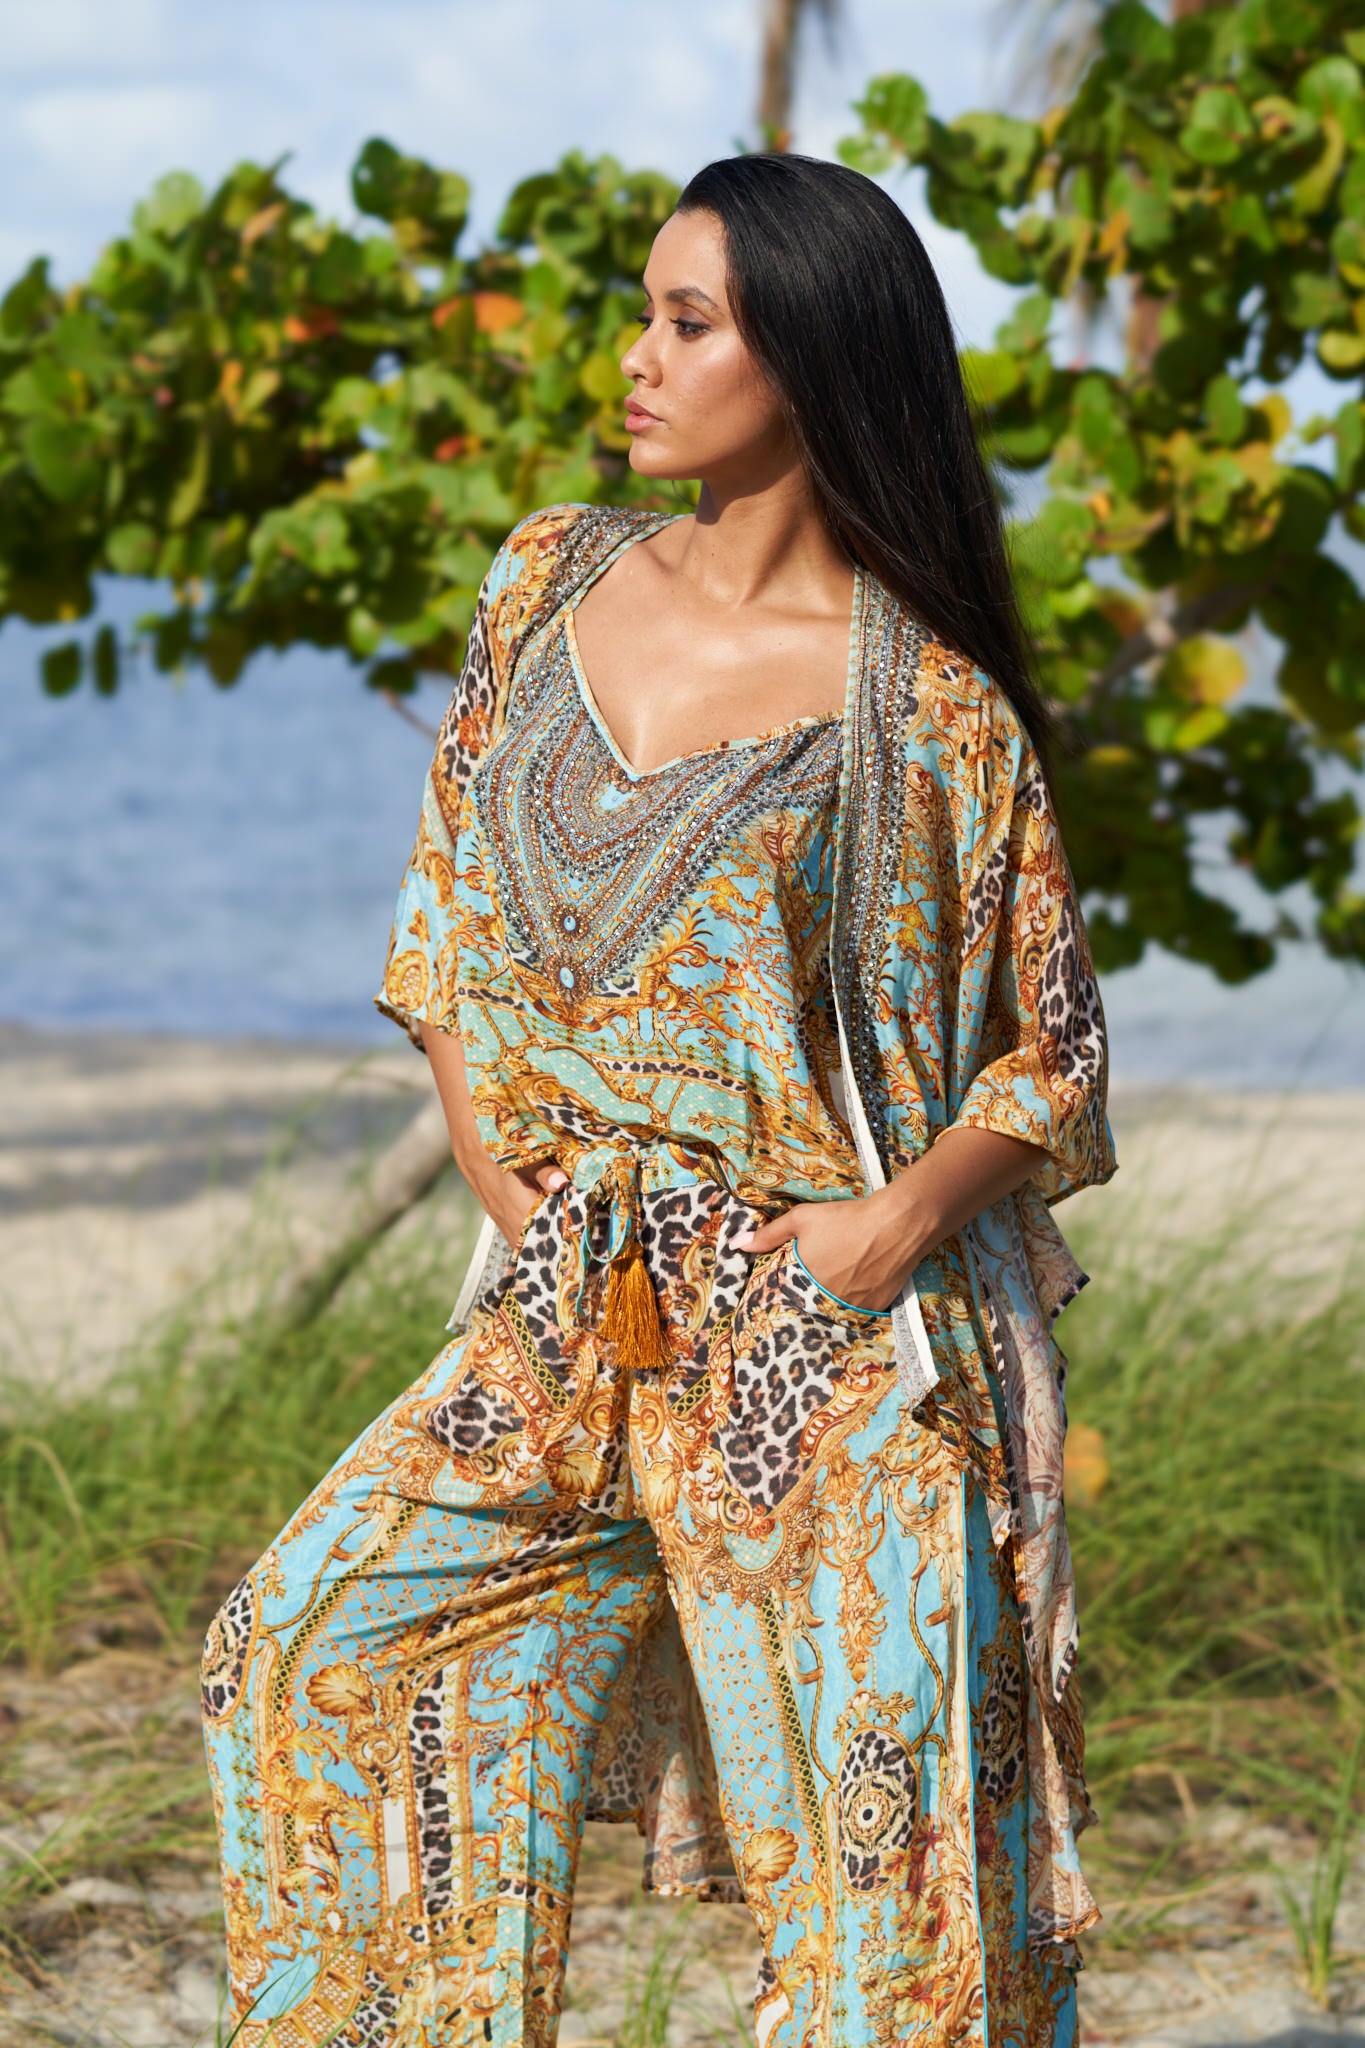 Premium Photo  Fashion woman wearing beach clothes on resort